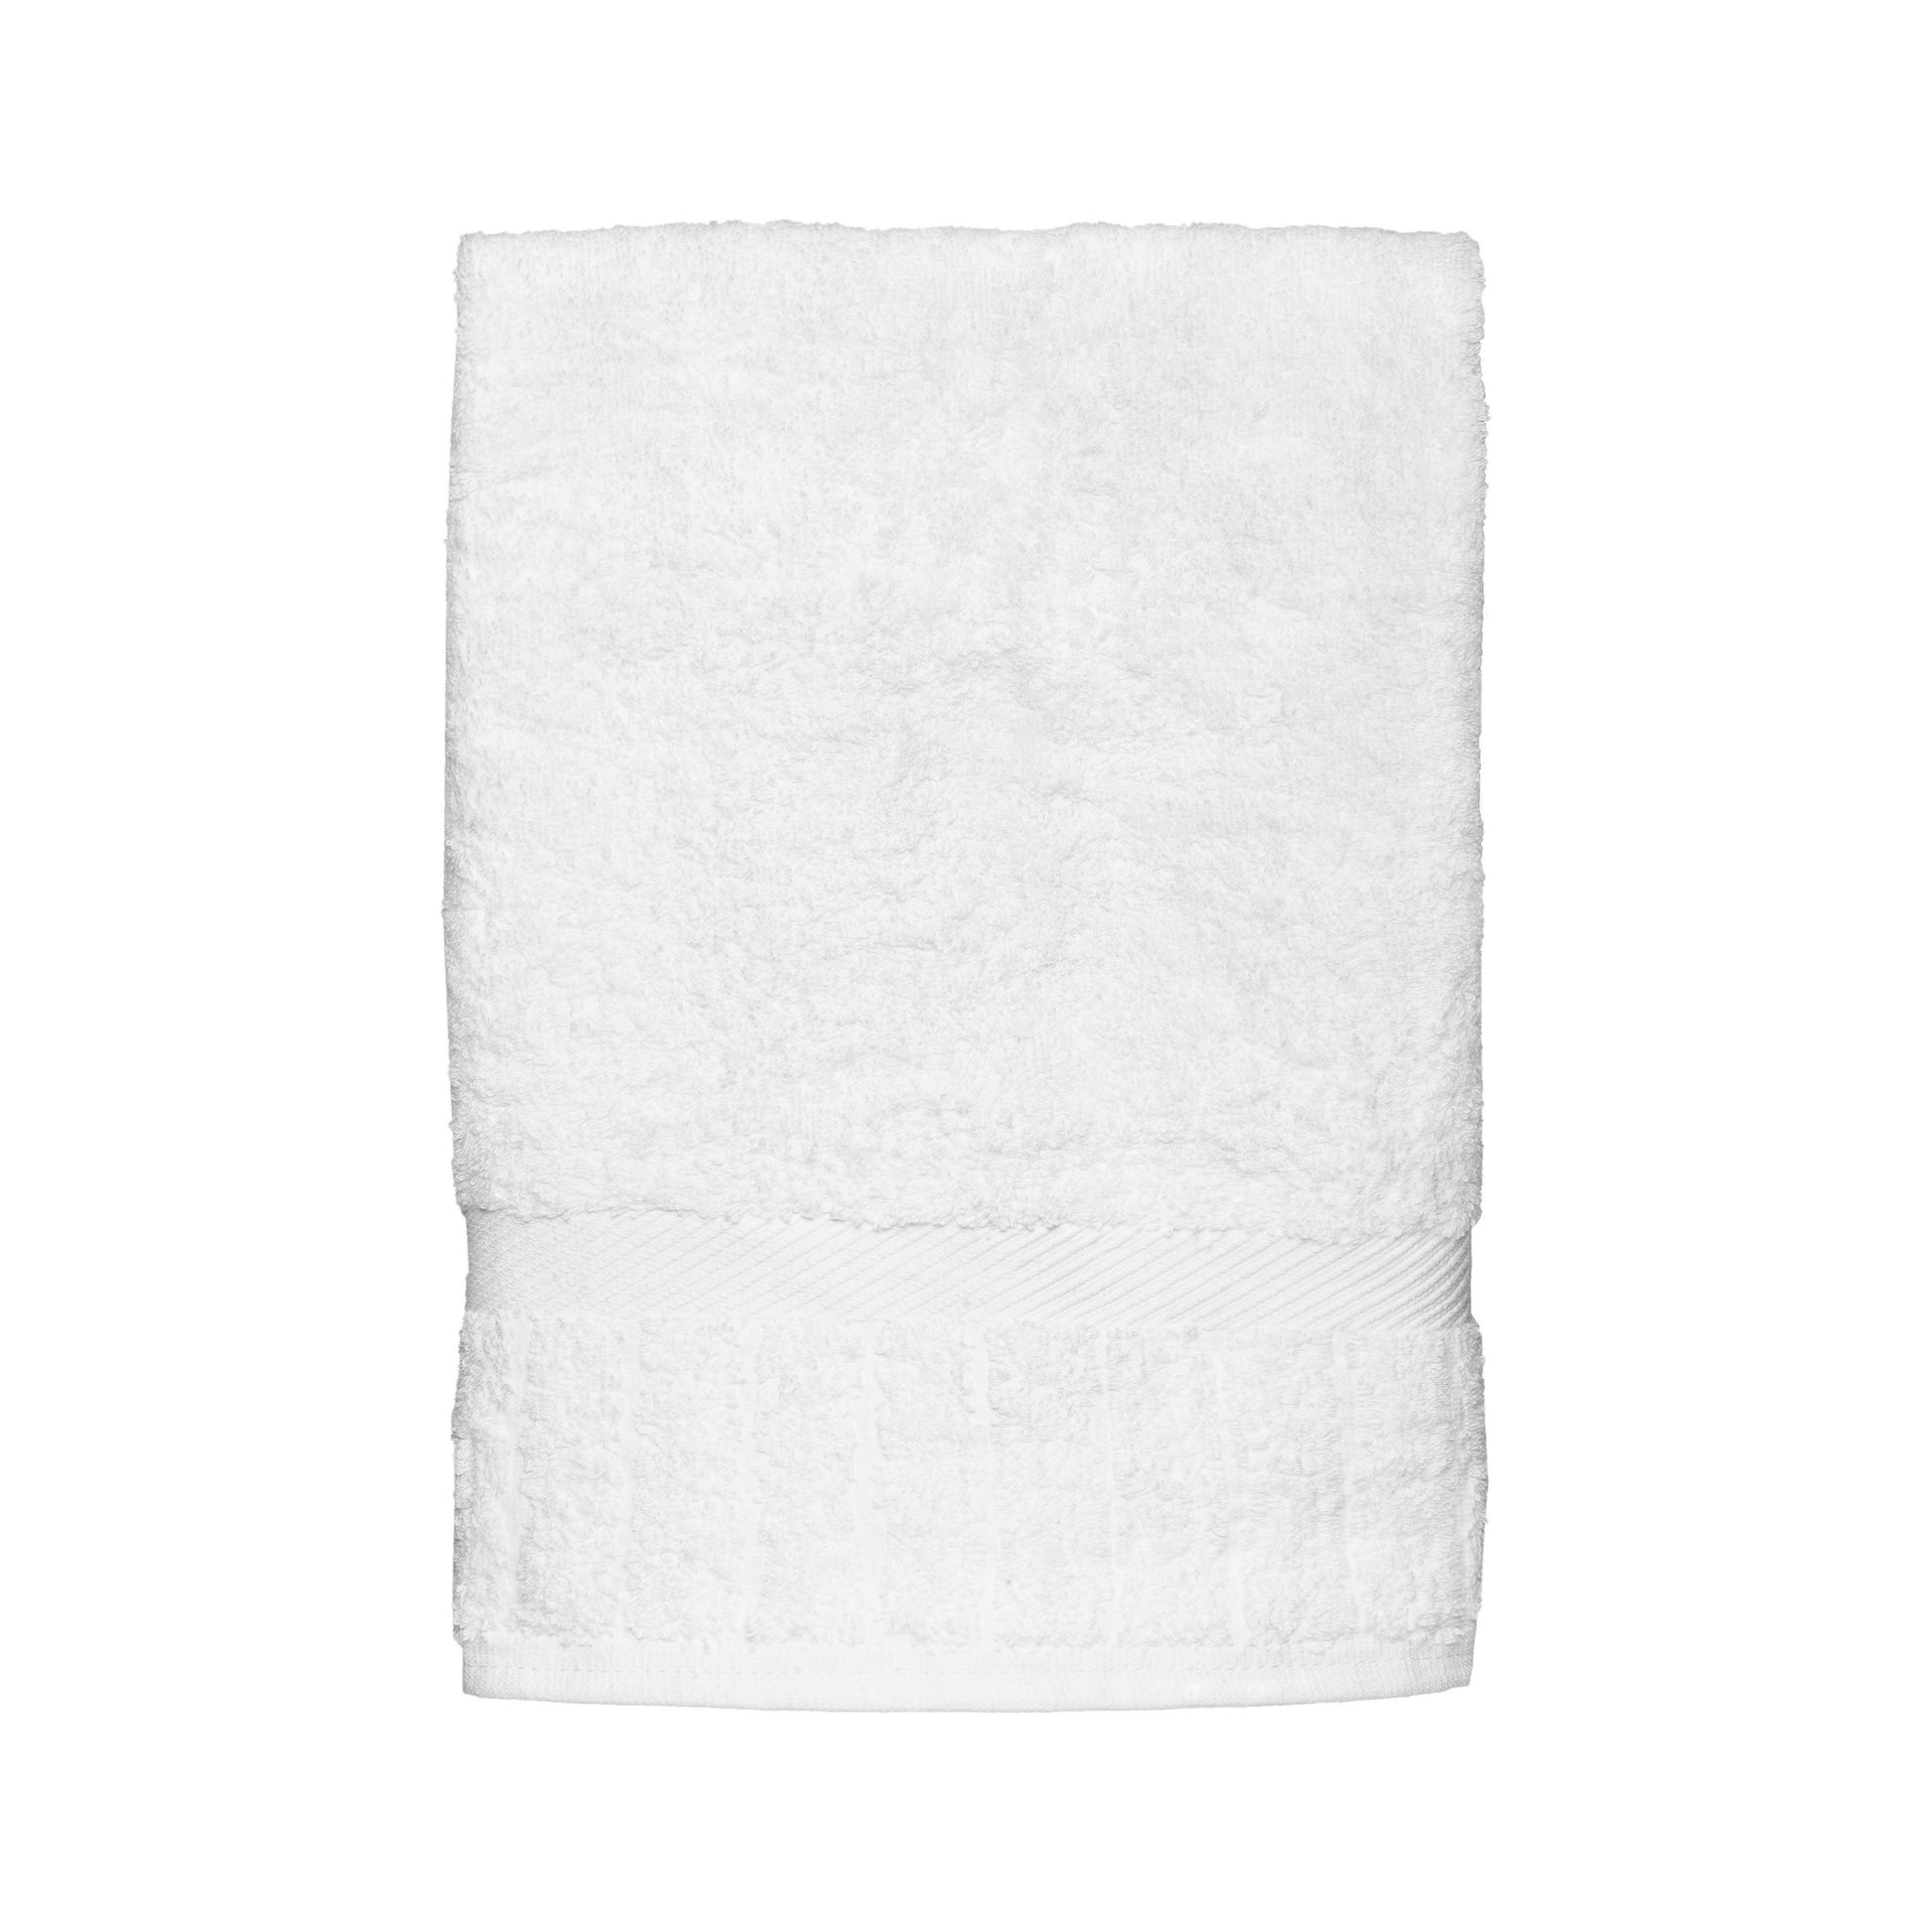 Superior Marche Egyptian Cotton Bath Towel - Set of 2 - On Sale